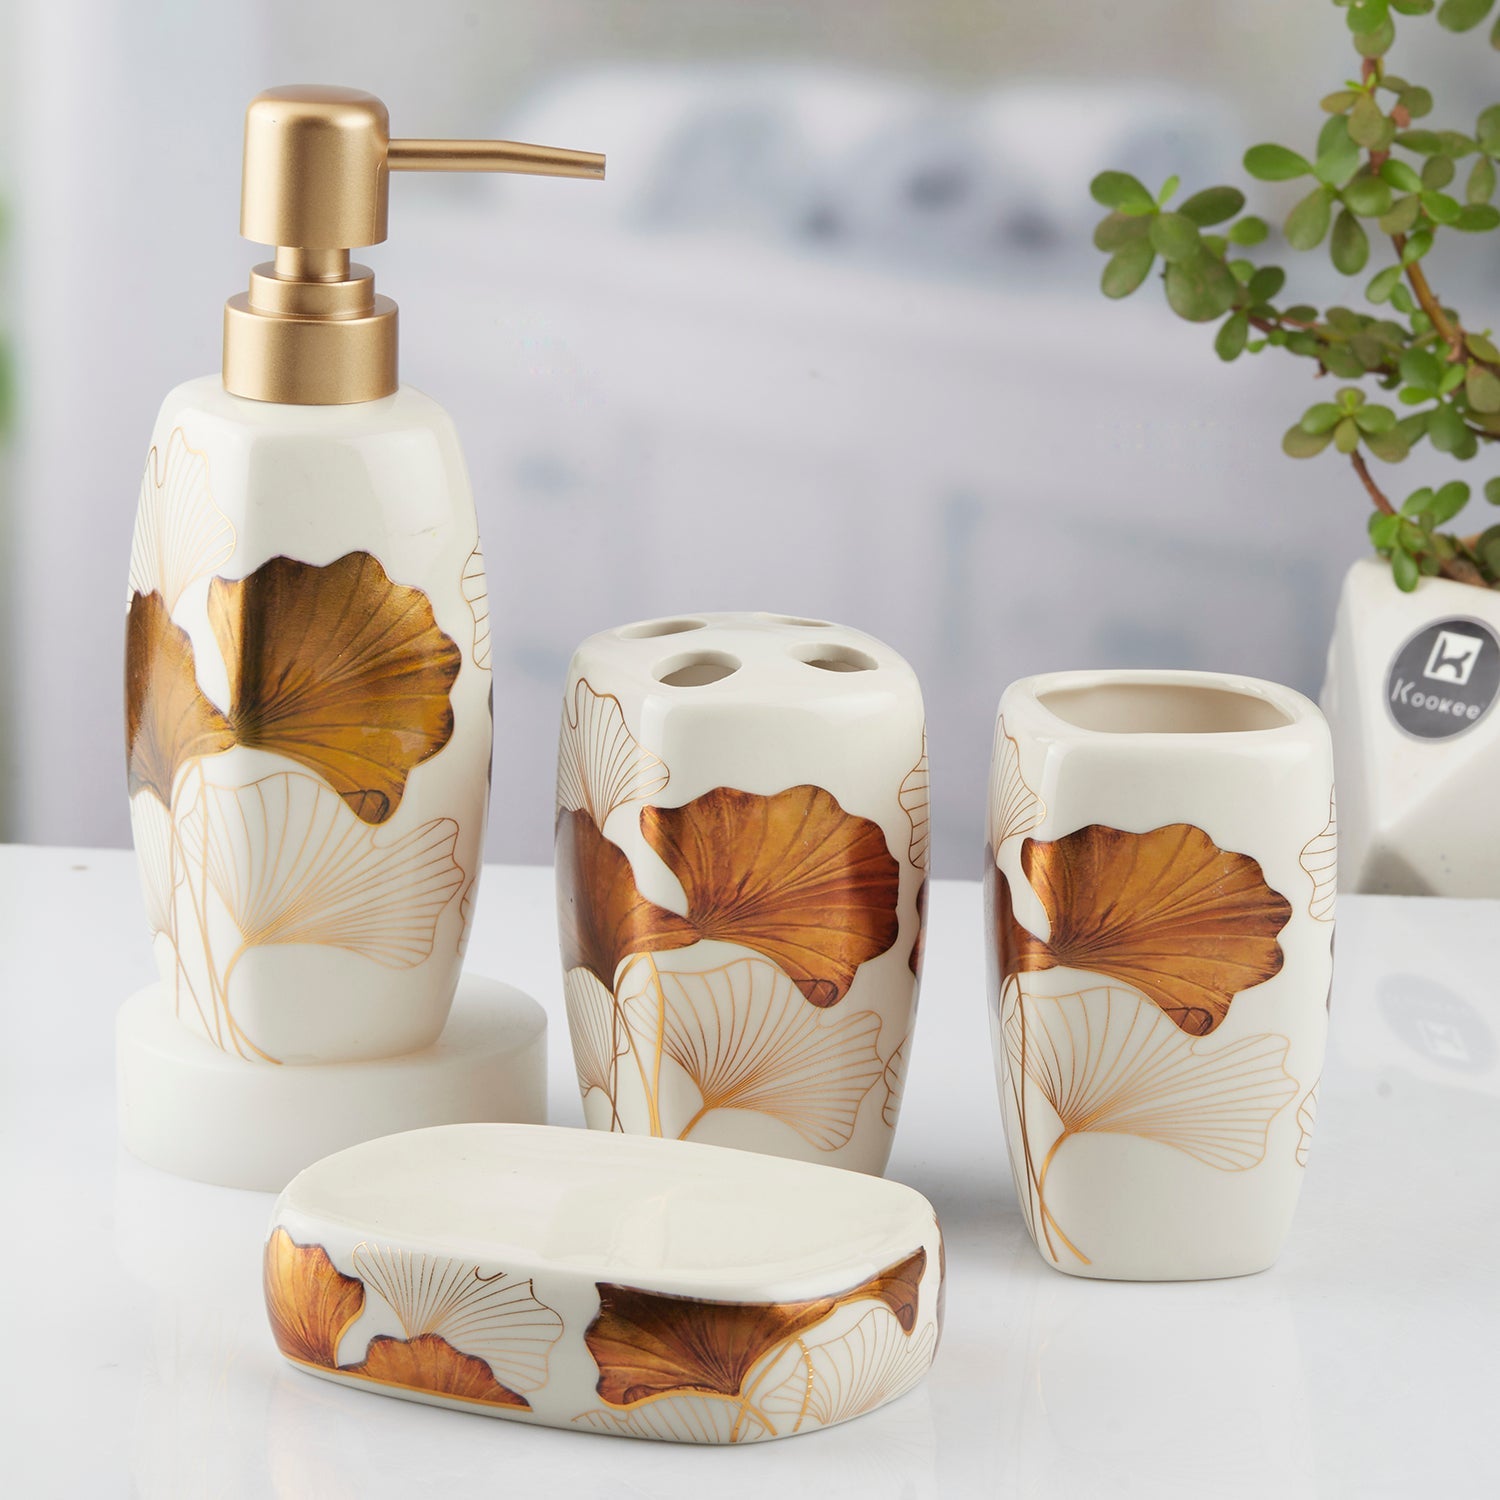 Ceramic Bathroom Set of 4 with Soap Dispenser (10396)